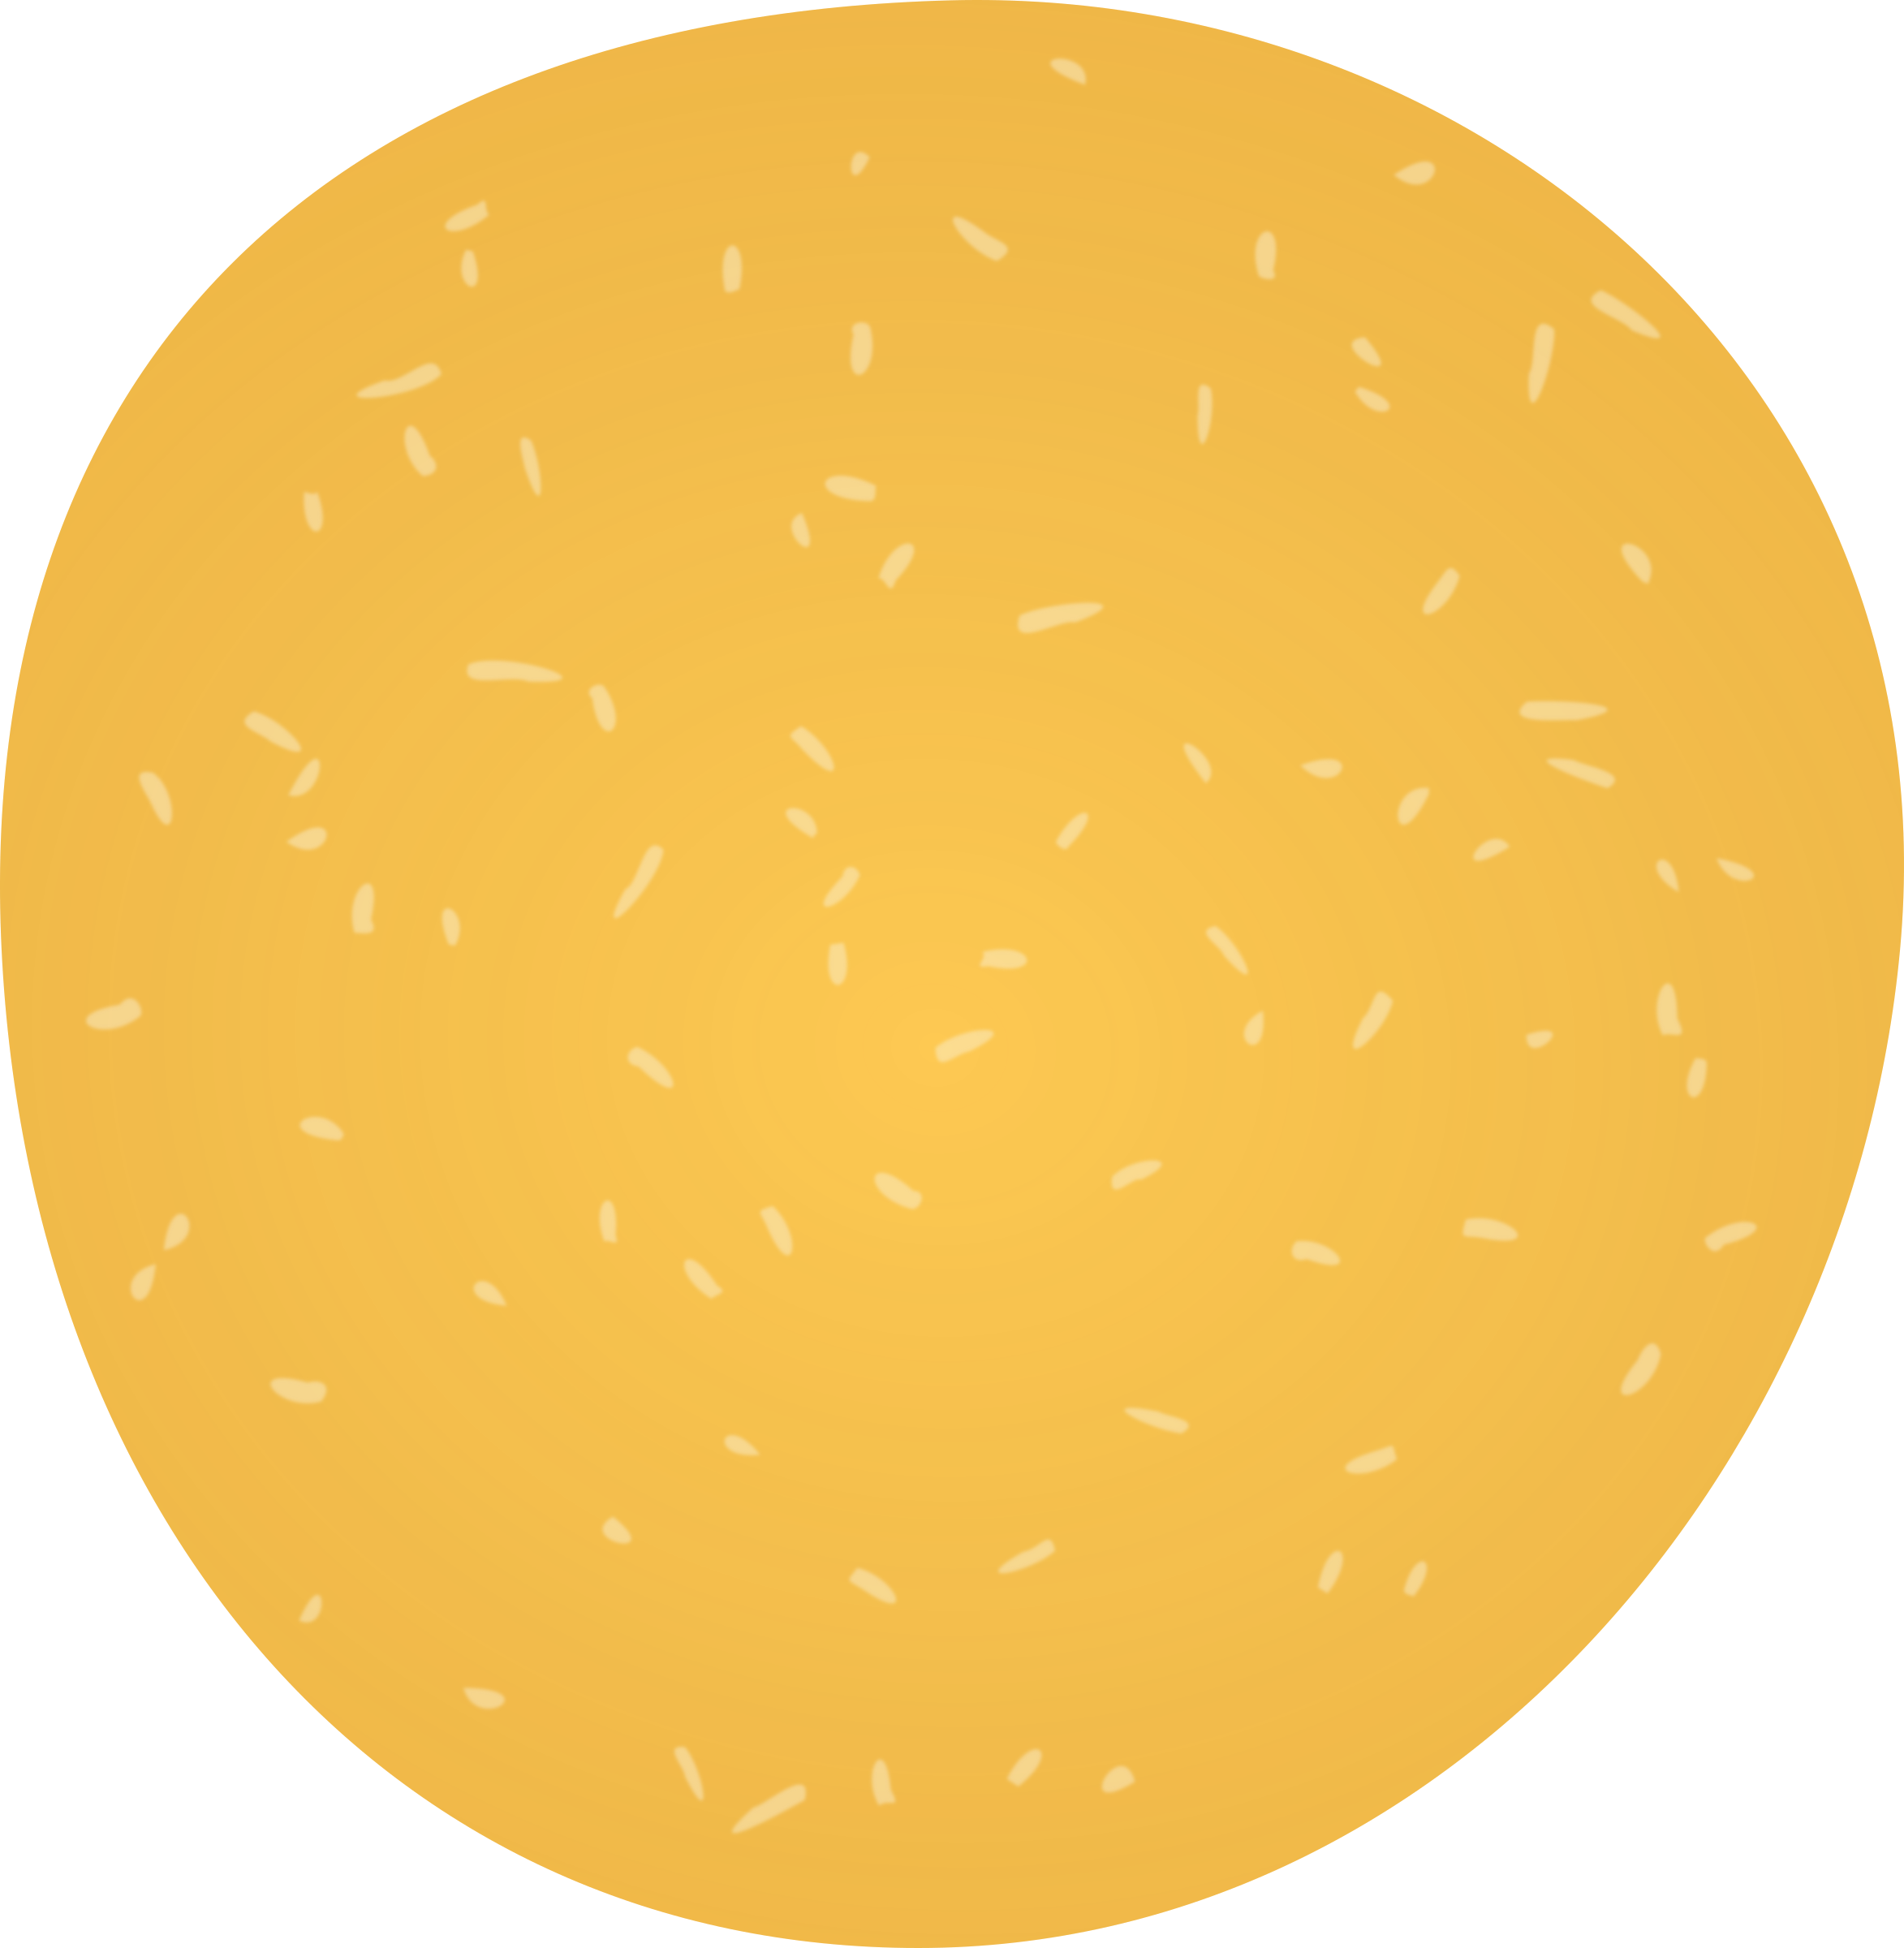 This Free Icons Png Design Of Hamburger Bun With Sesame - Circle (2346x2400)